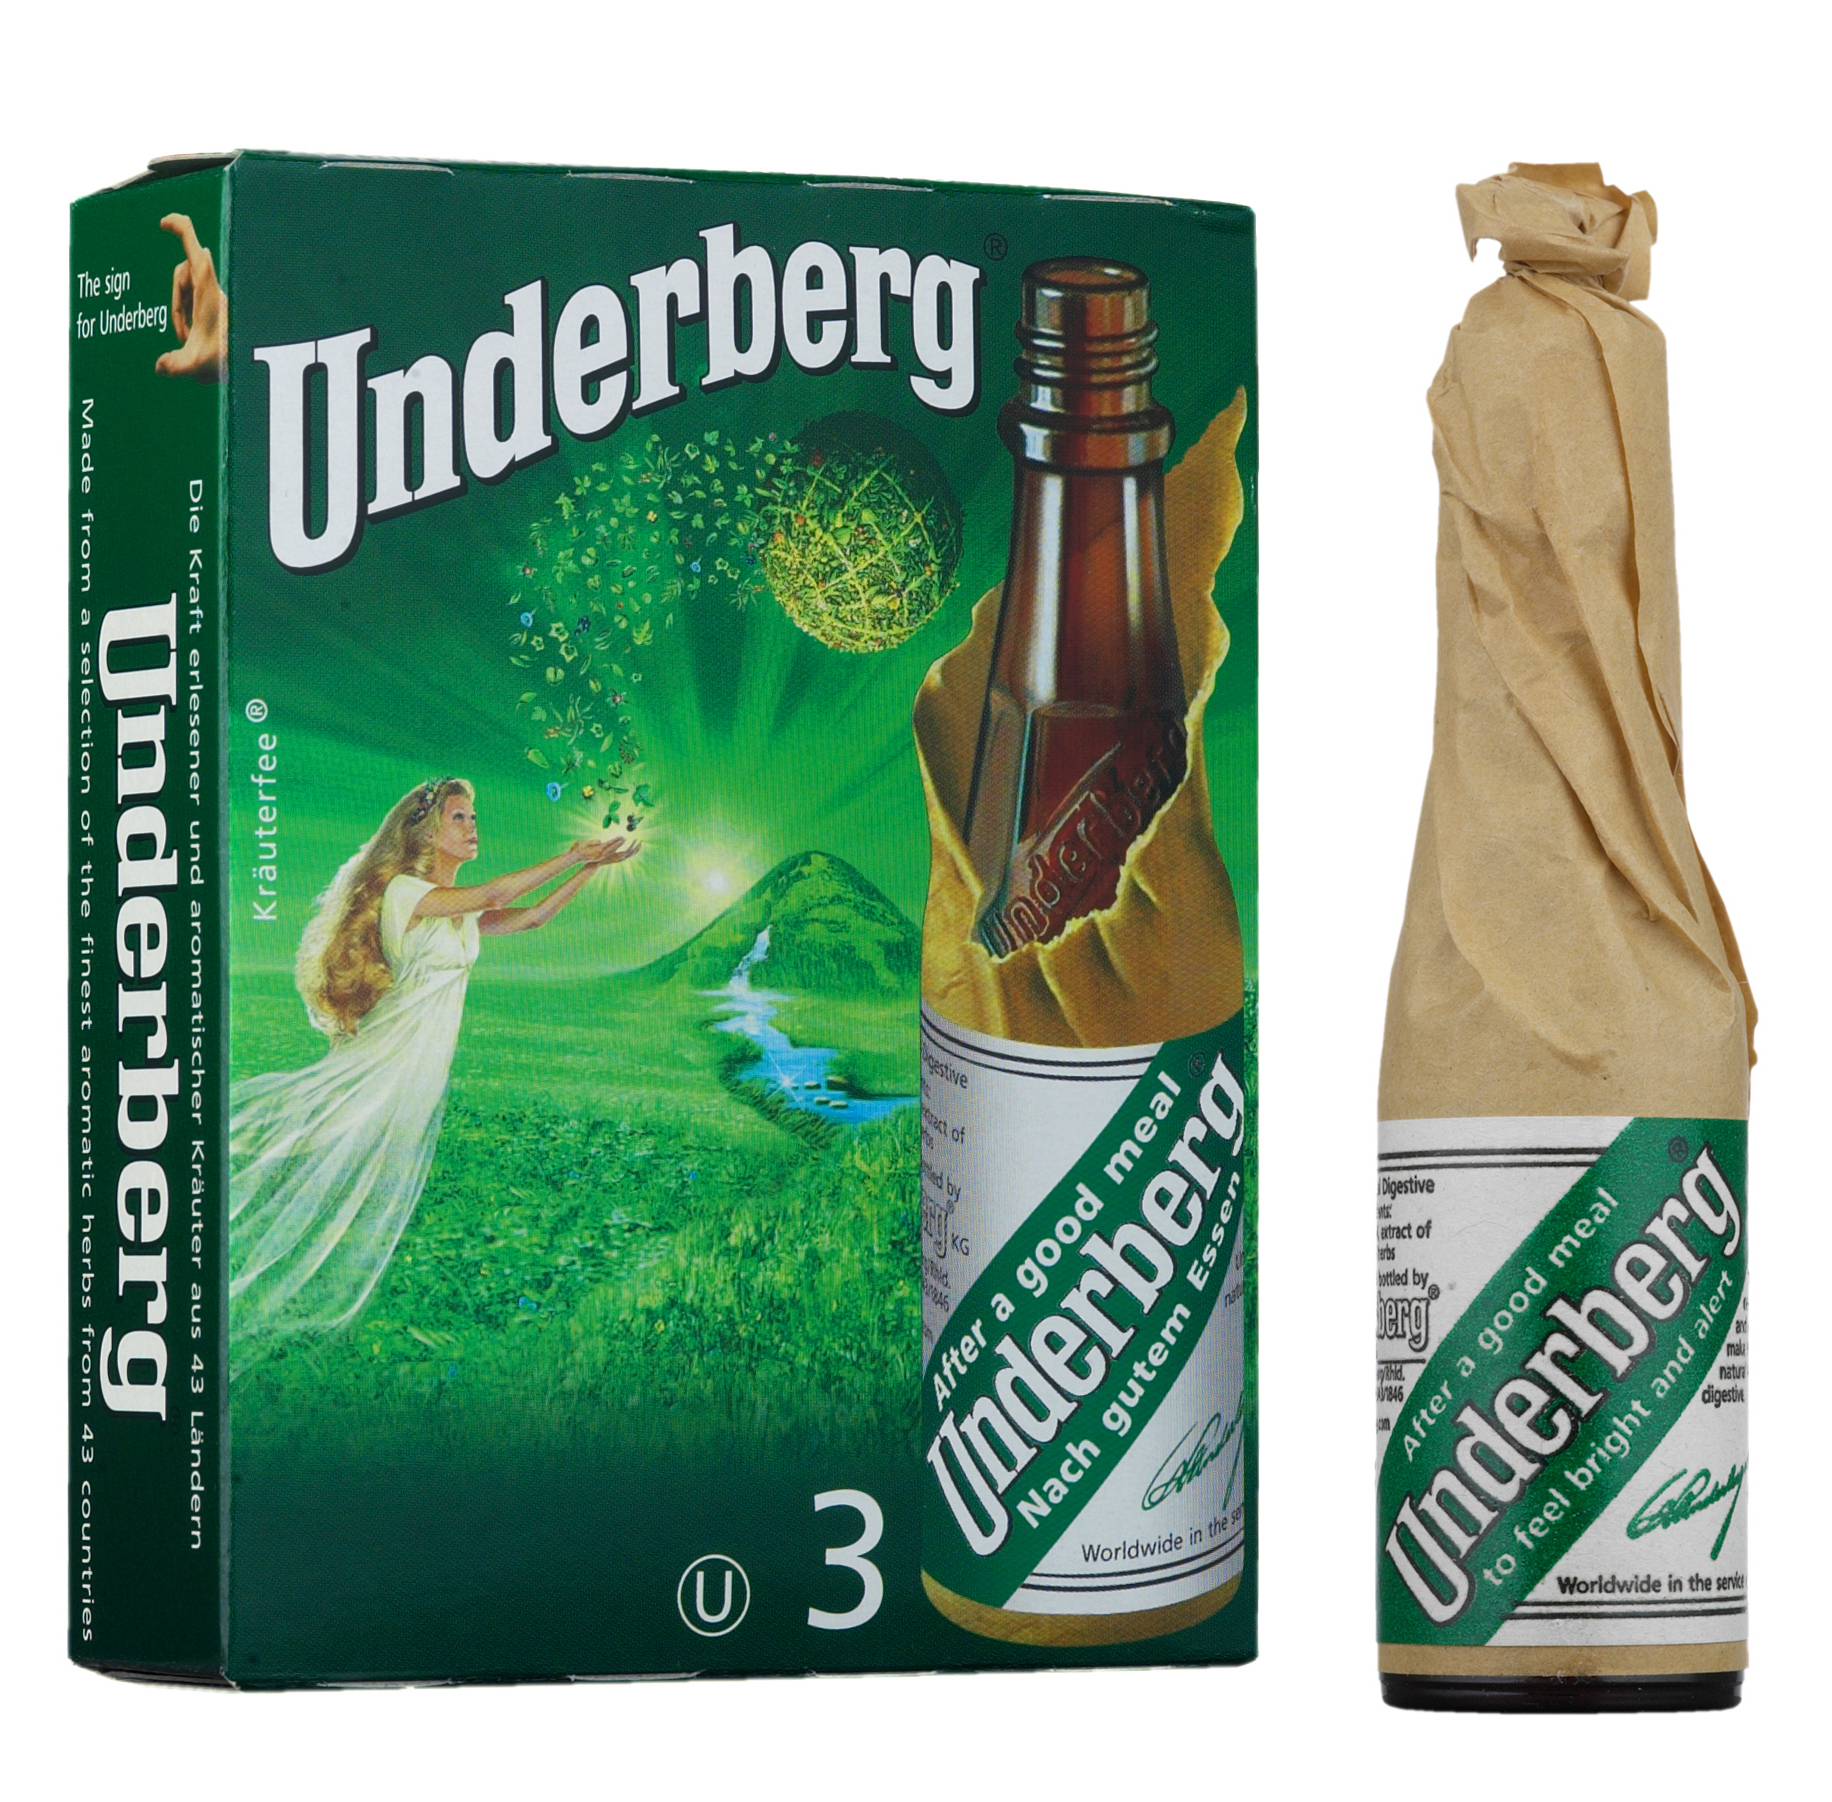 Underberg 3-pack